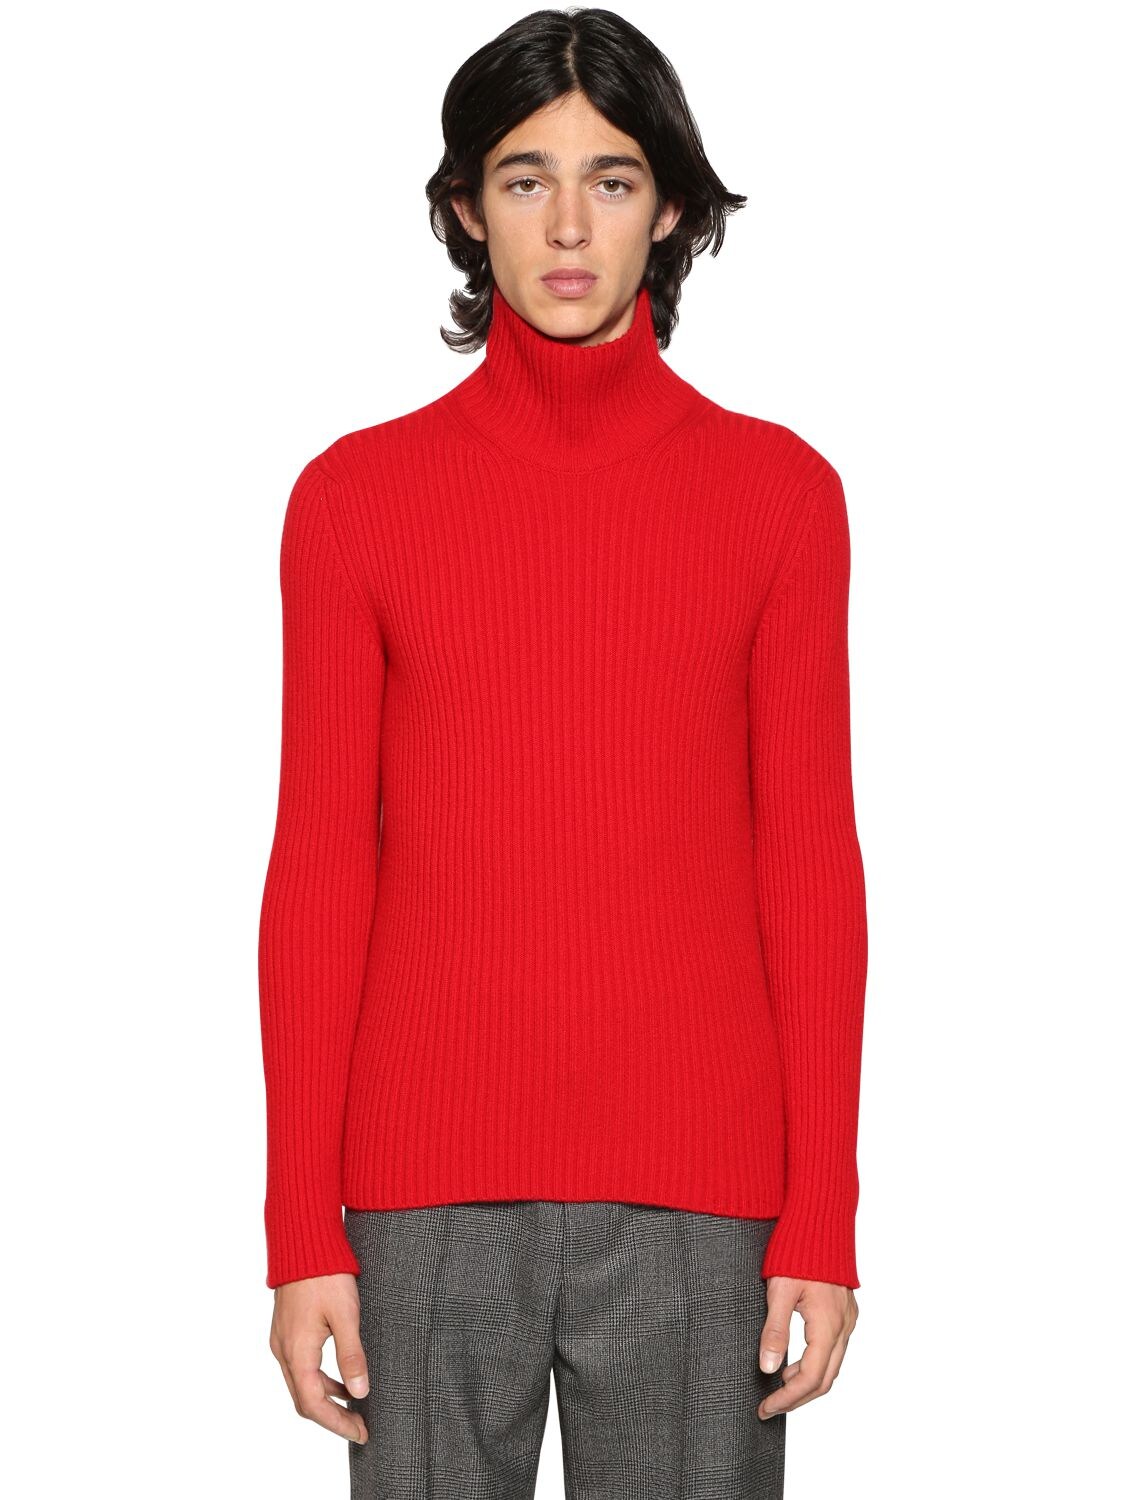 balenciaga red turtleneck sweater